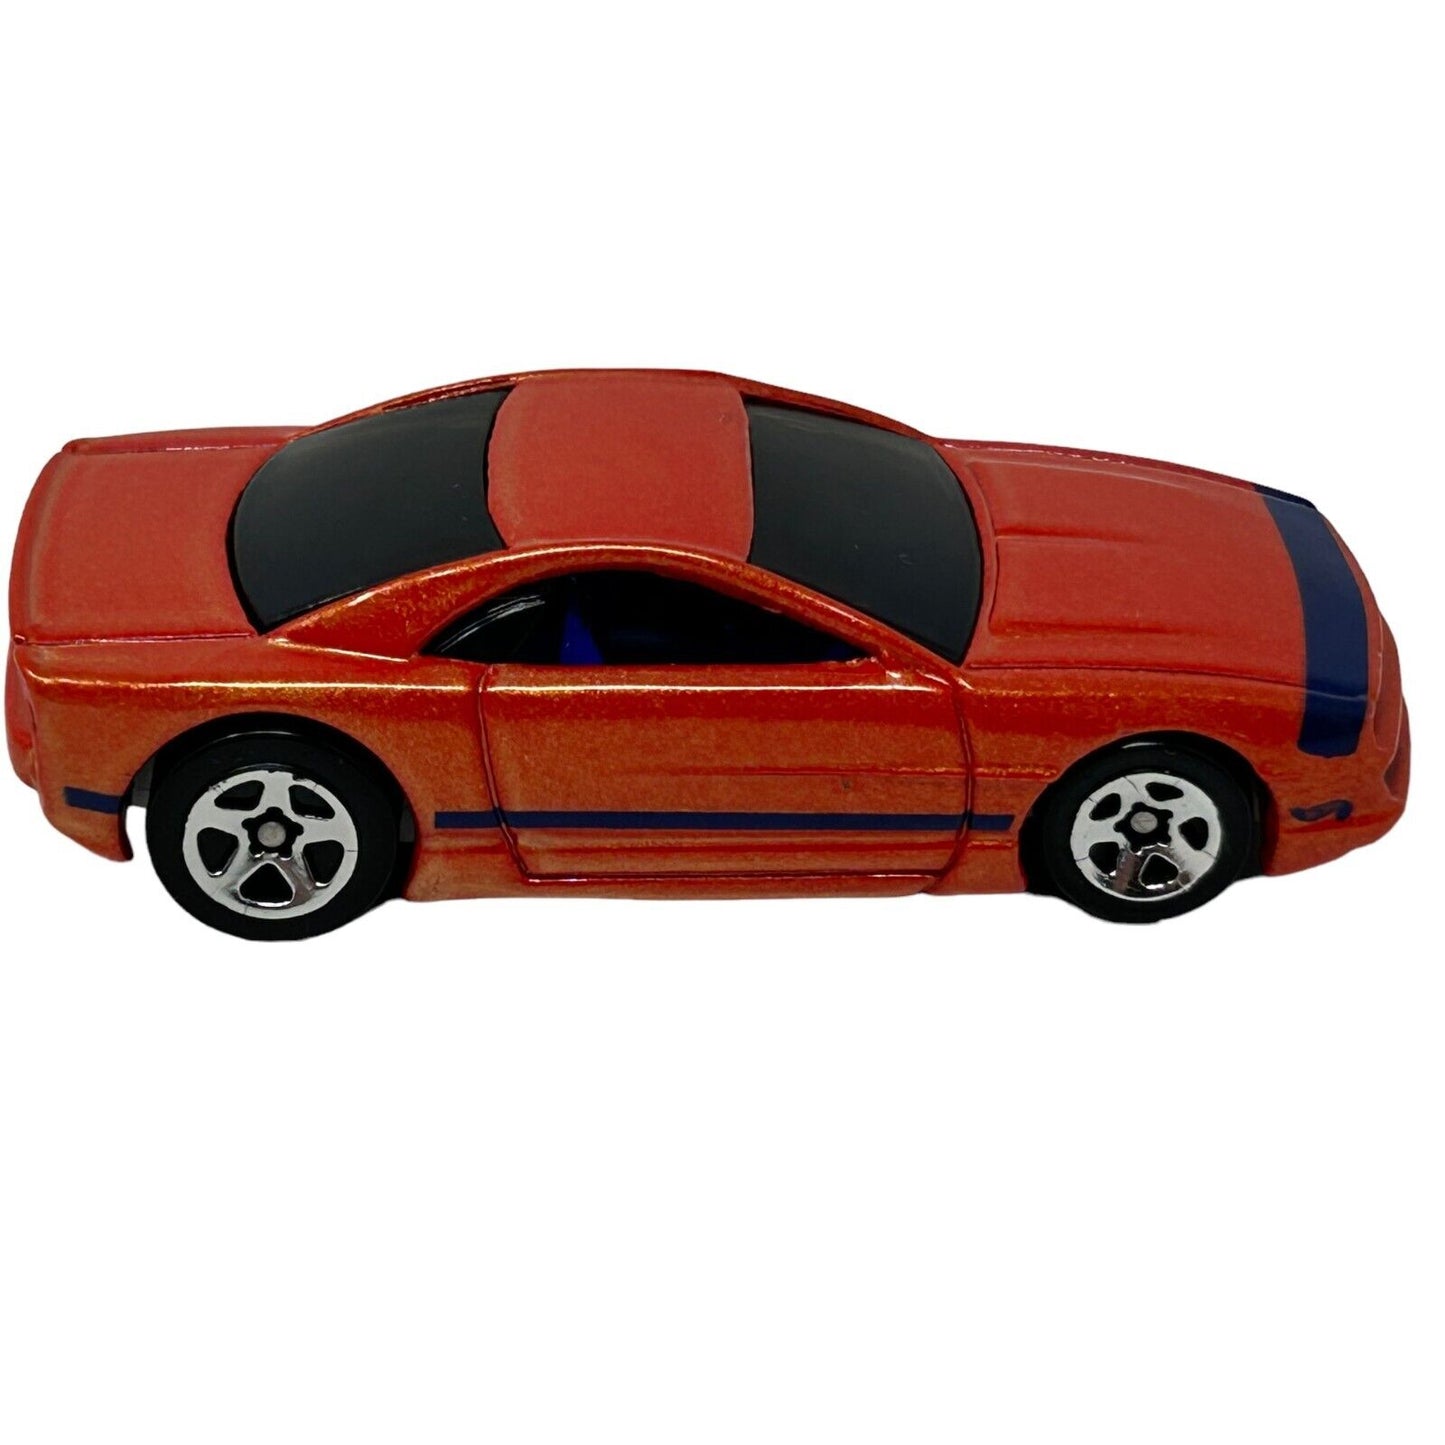 Muscle Tone Hot Wheels Collectible Diecast Car Orange Toy Vehicle Vintage Y2Ks